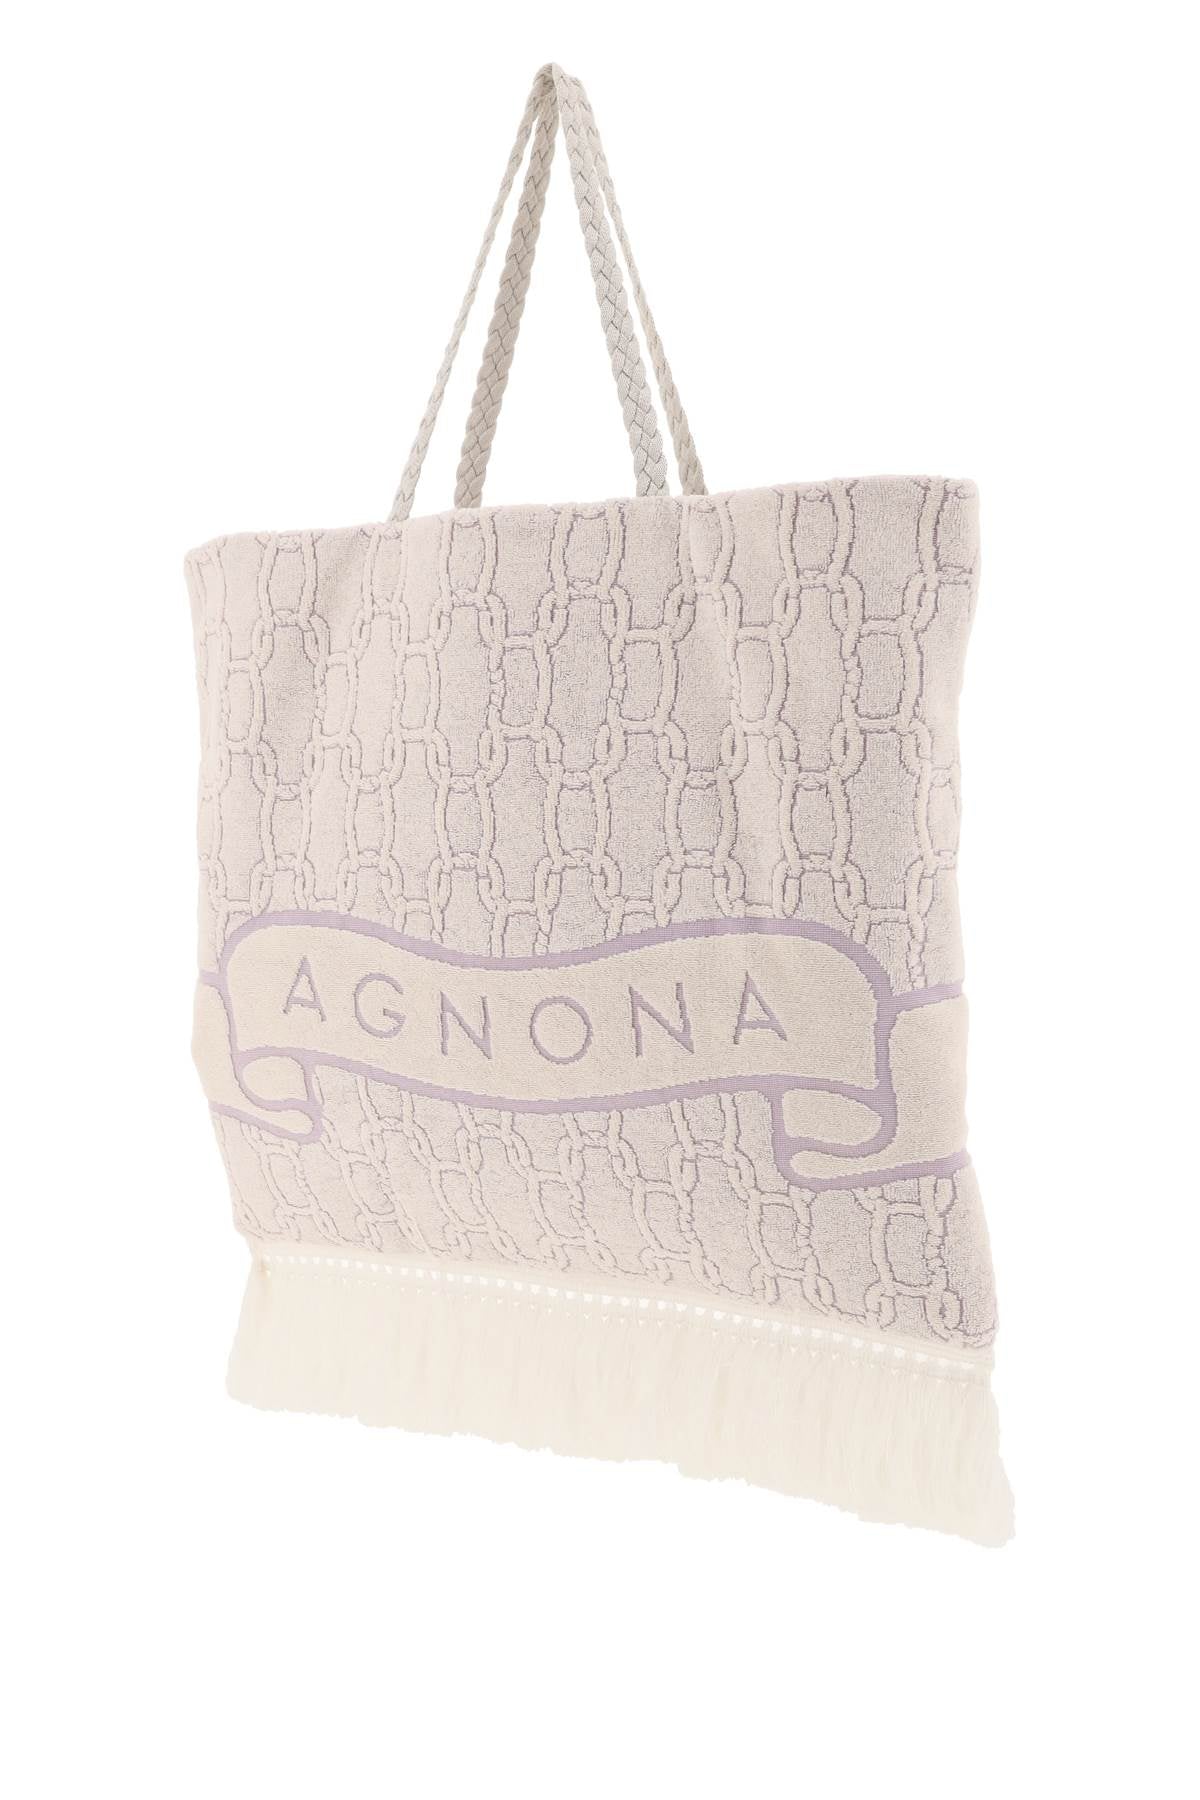 Agnona cotton tote bag-2